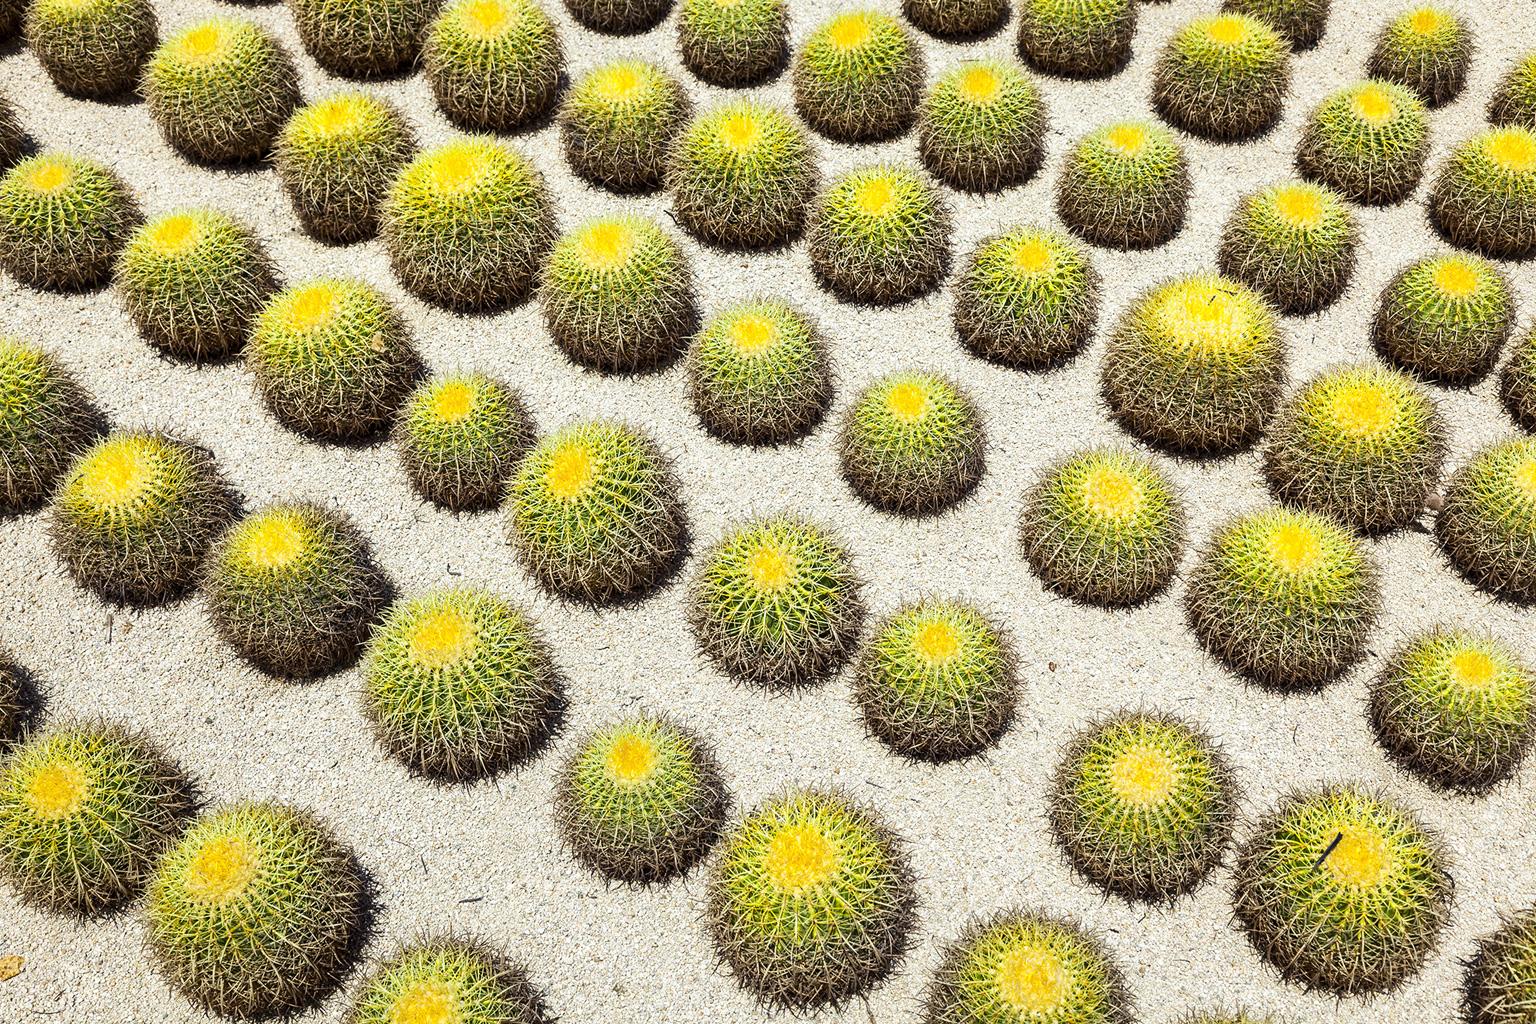 Cacti  - large format photograph of iconic desert cactus landscape 27" x 40"